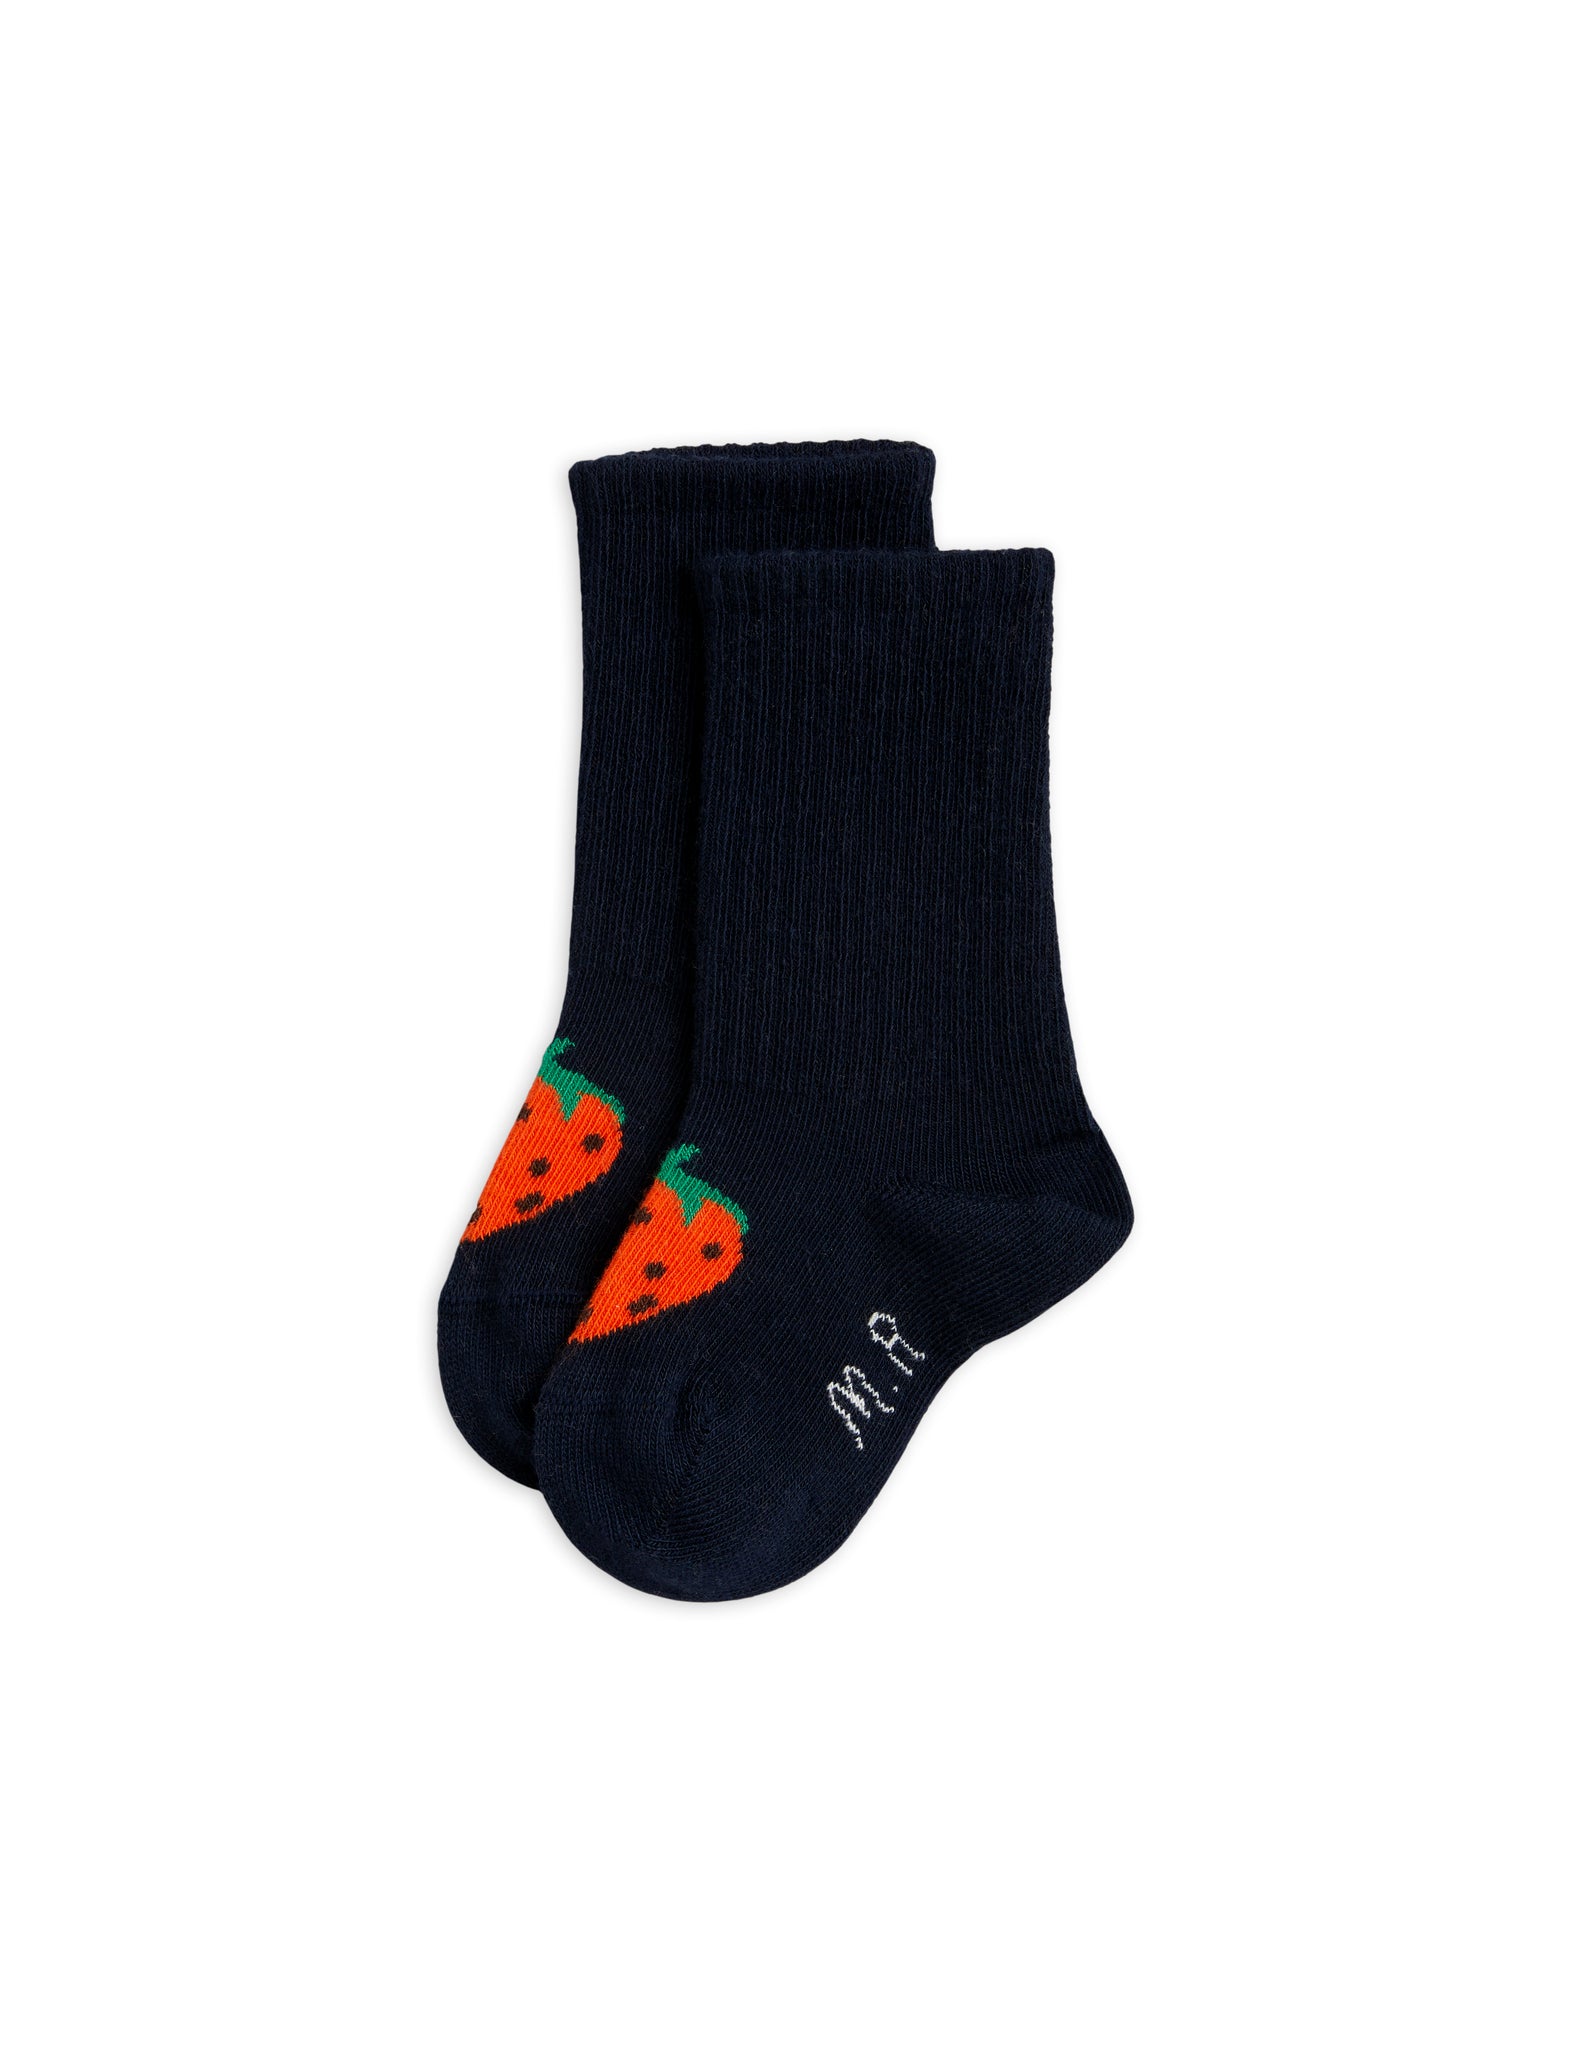 Strawberries baby socks